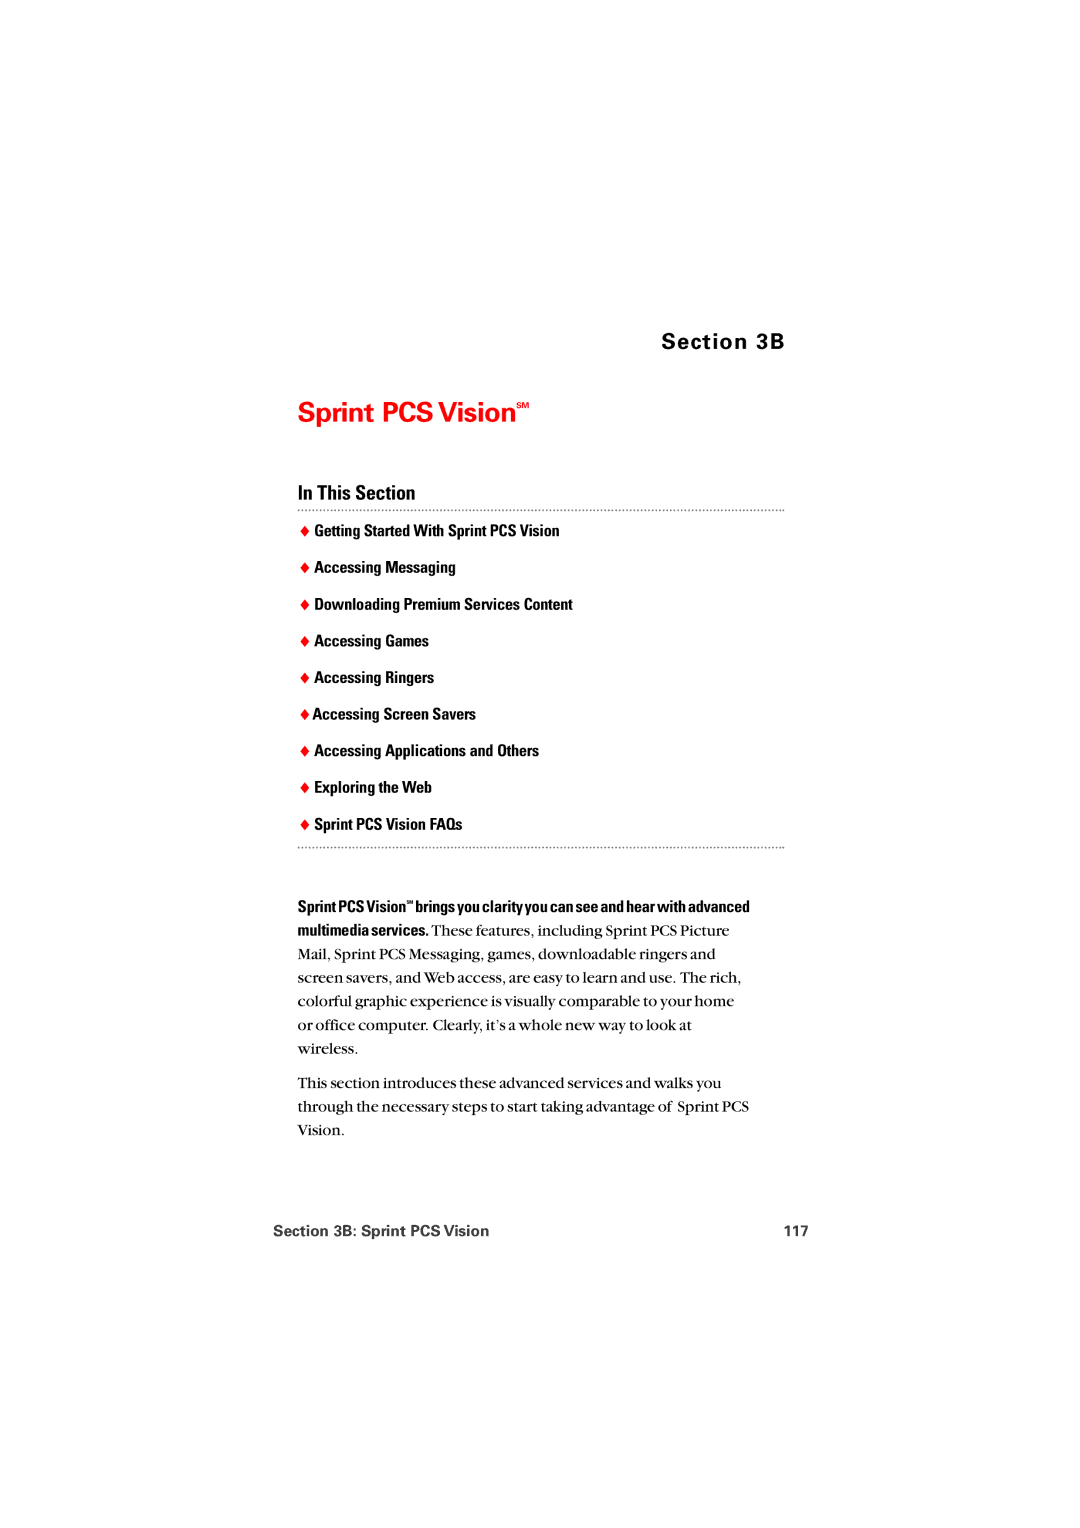 Sprint Nextel 8912 manual Sprint PCS VisionSM, Sprint PCS Vision 117 